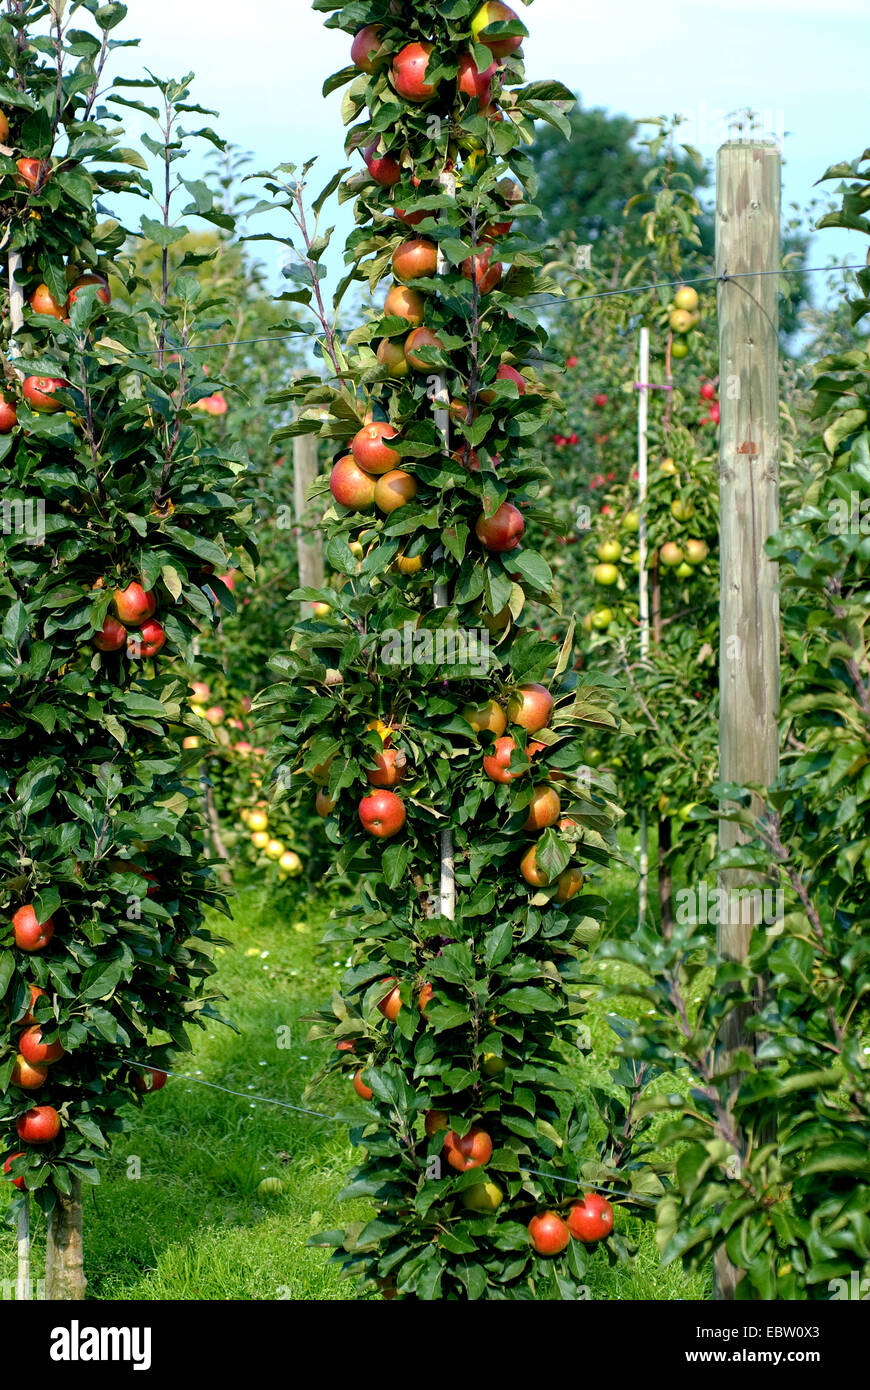 Apfelbaum (Malus Domestica "Rondo", Malus Domestica Rondo), Sorte Rondo, Äpfel auf dem Baum Stockfoto